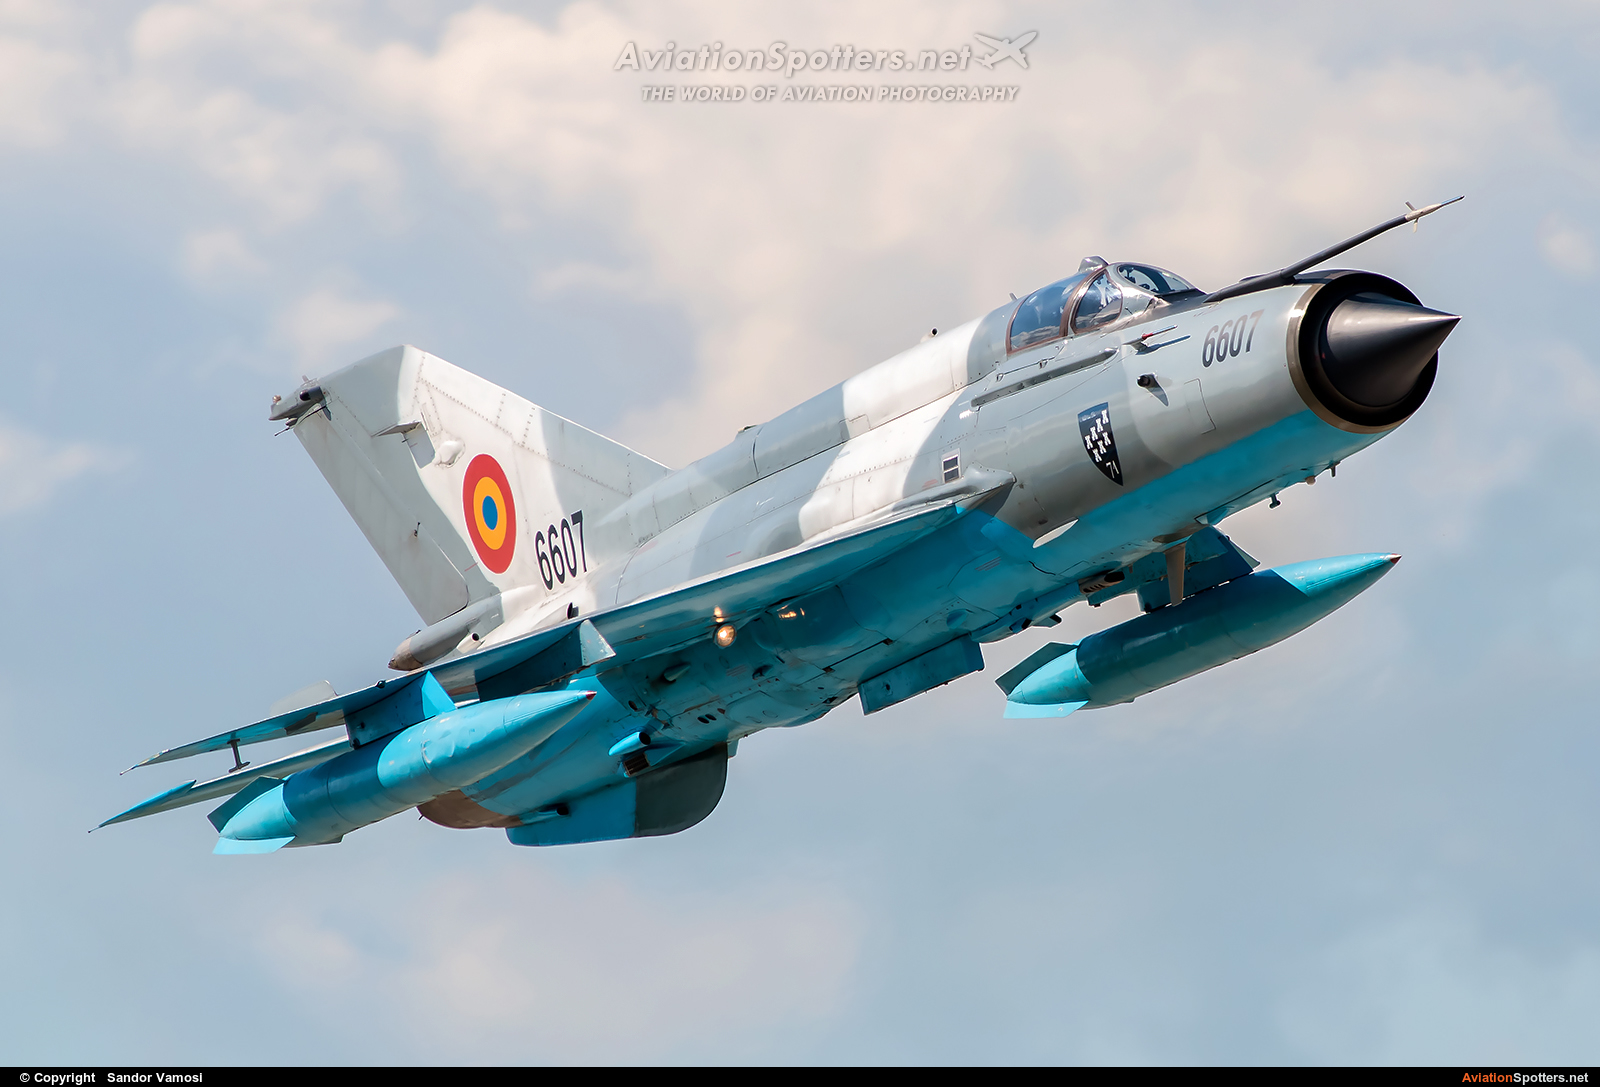 Romania - Air Force  -  MiG-21 LanceR C  (6607) By Sandor Vamosi (ALEX67)